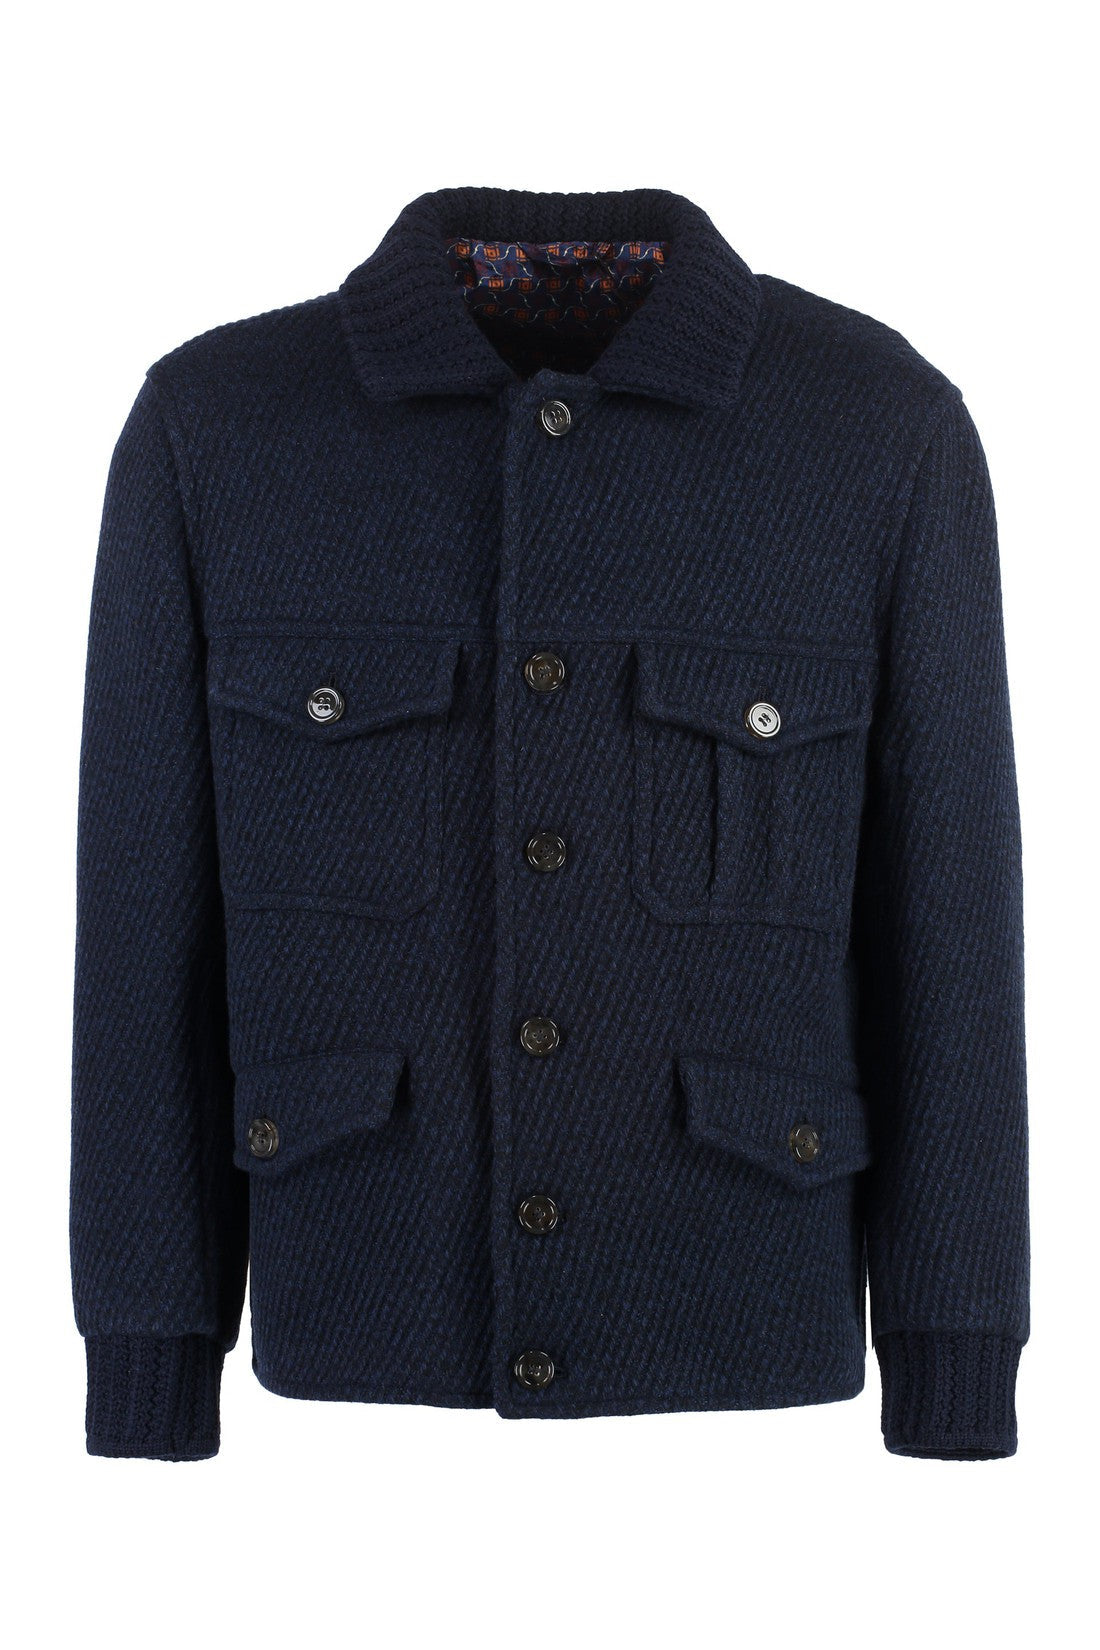 Etro-OUTLET-SALE-Wool knit jacket-ARCHIVIST